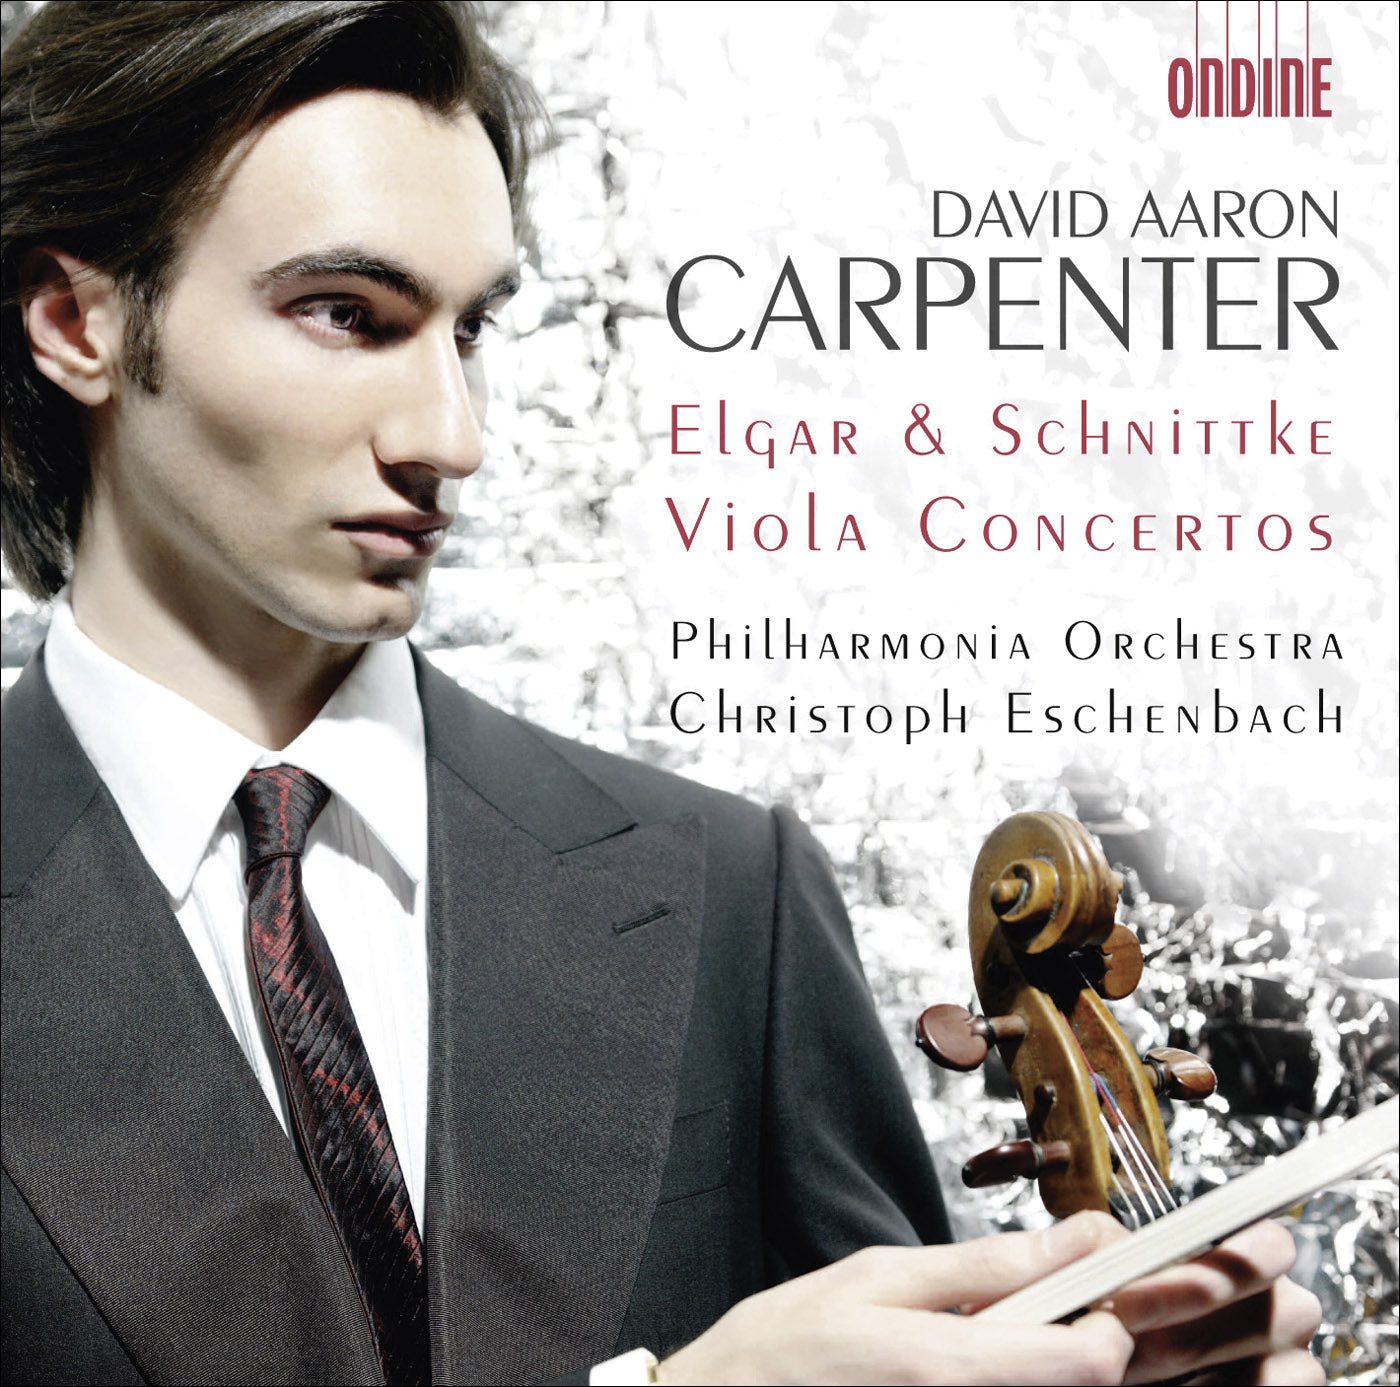 Elgar, Schnittke: Viola Concertos / David Aaron Carpenter